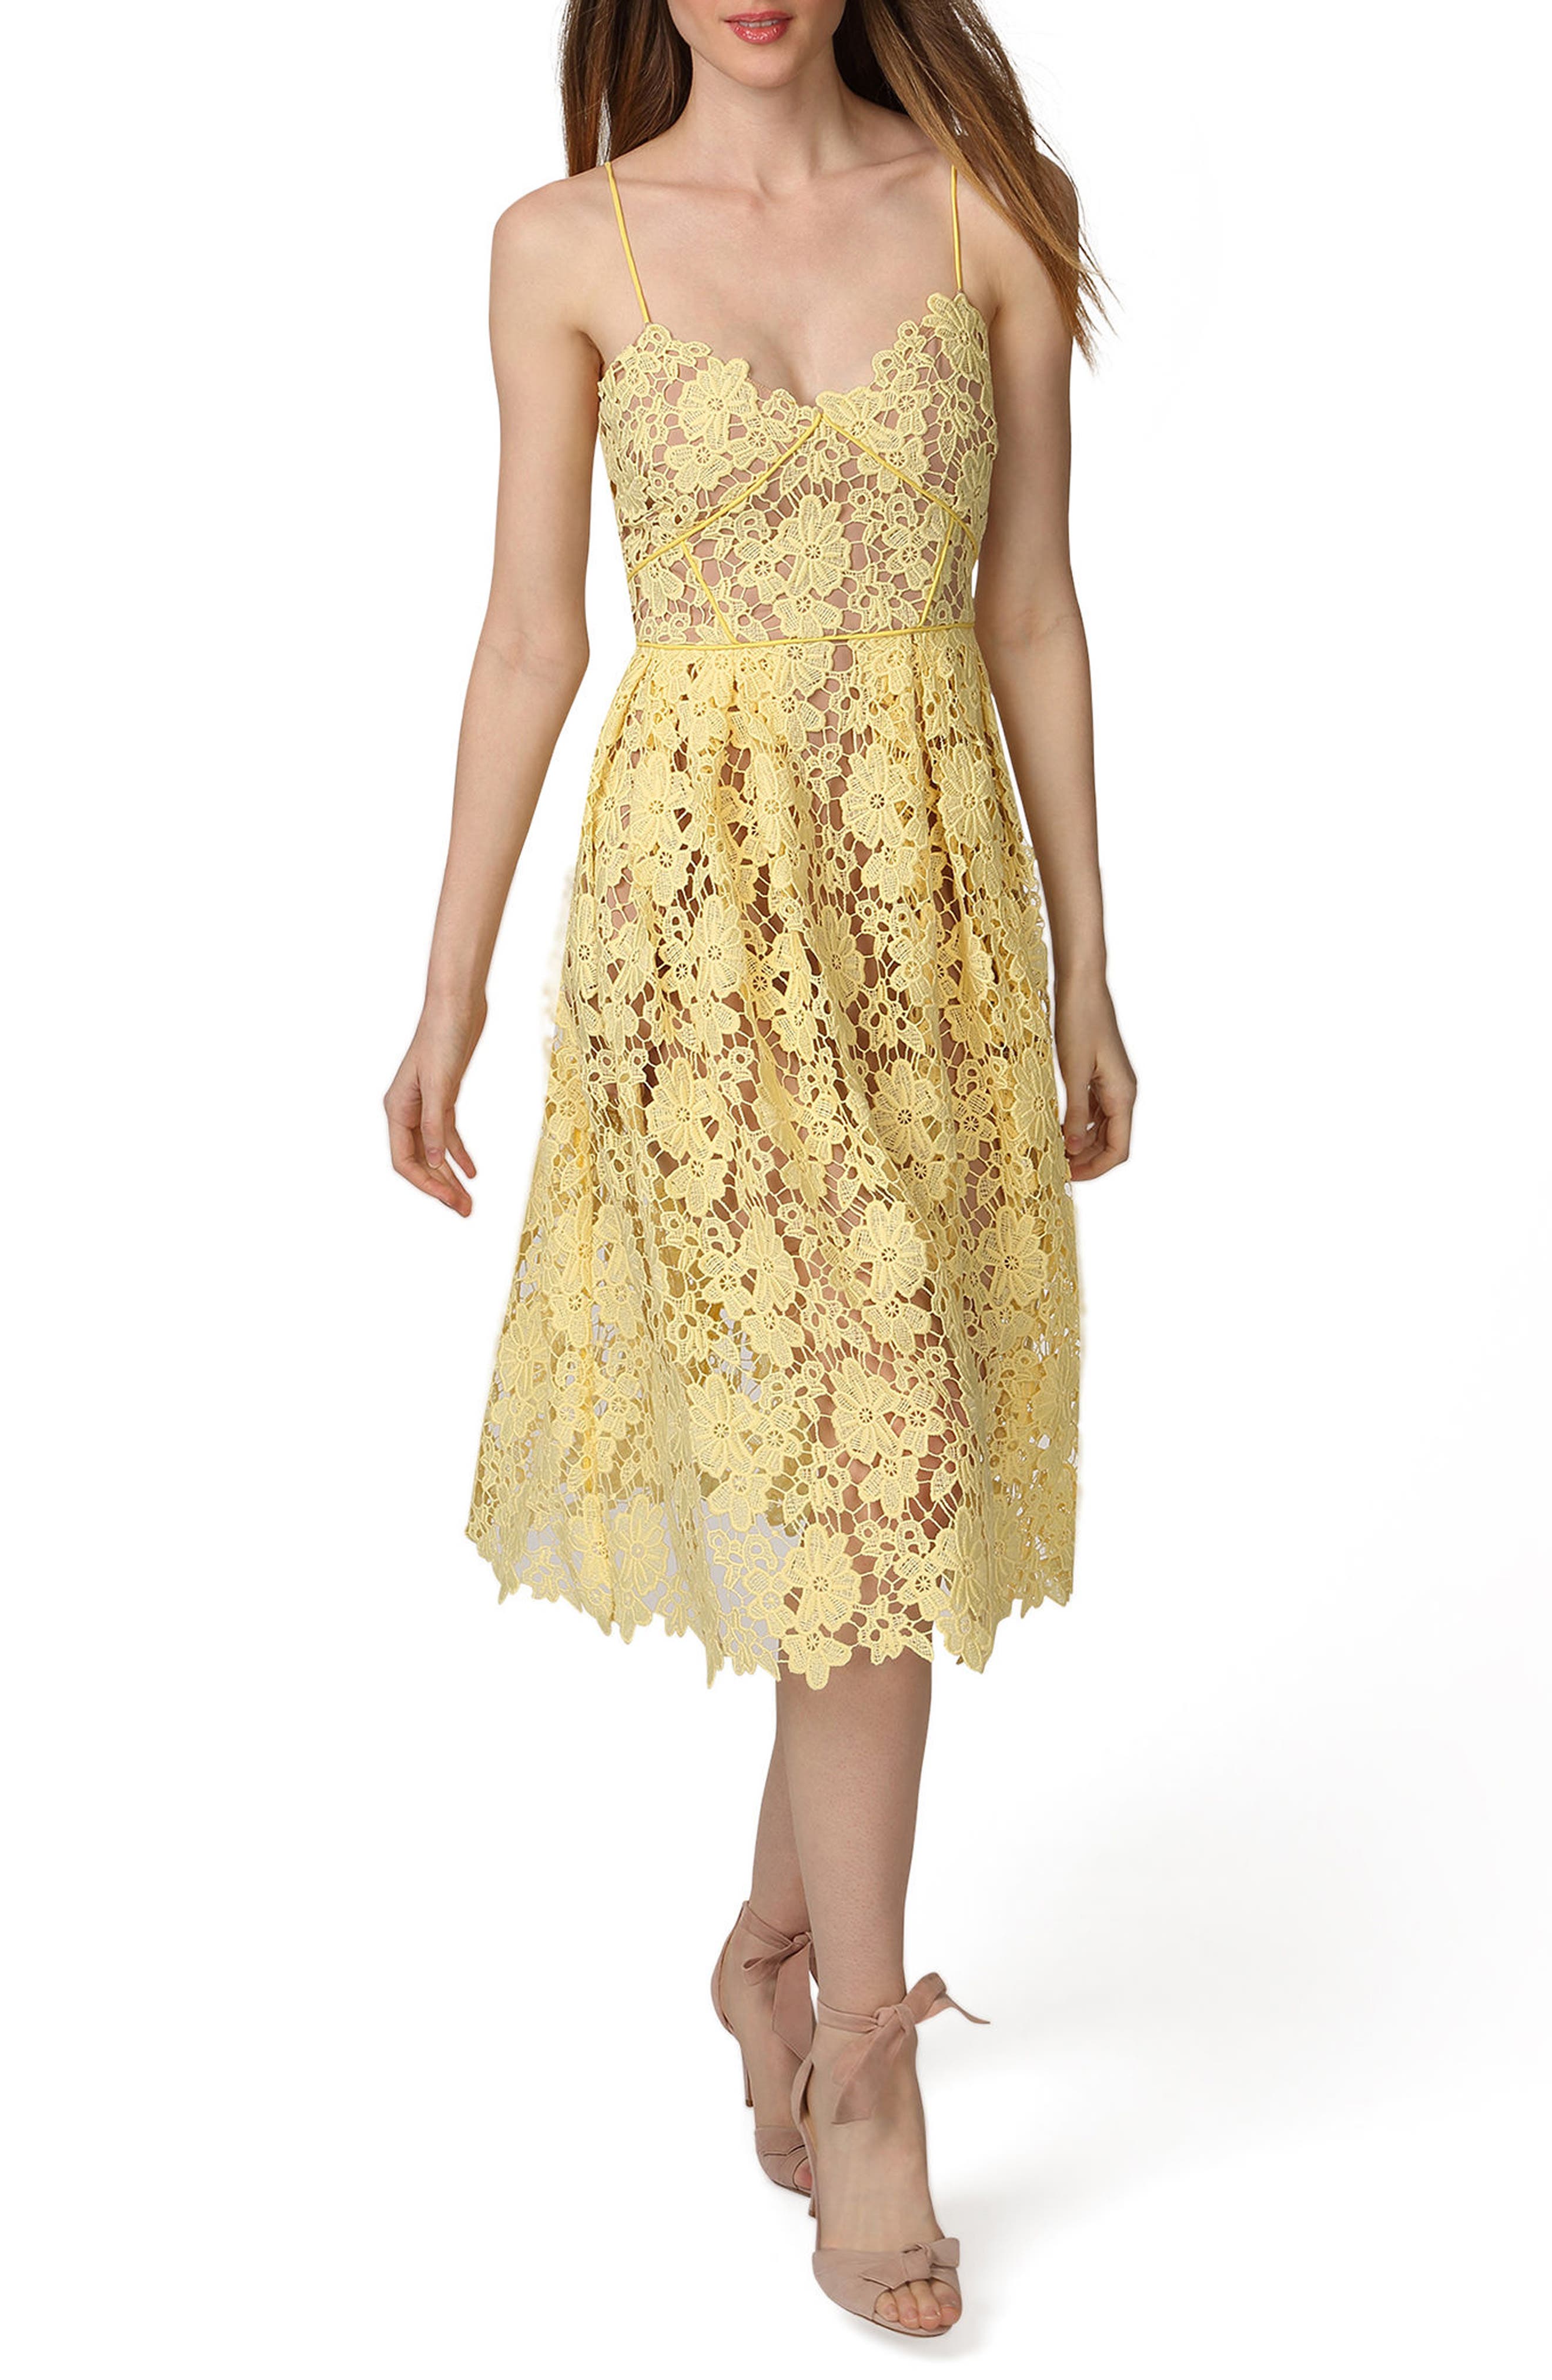 donna morgan yellow dress